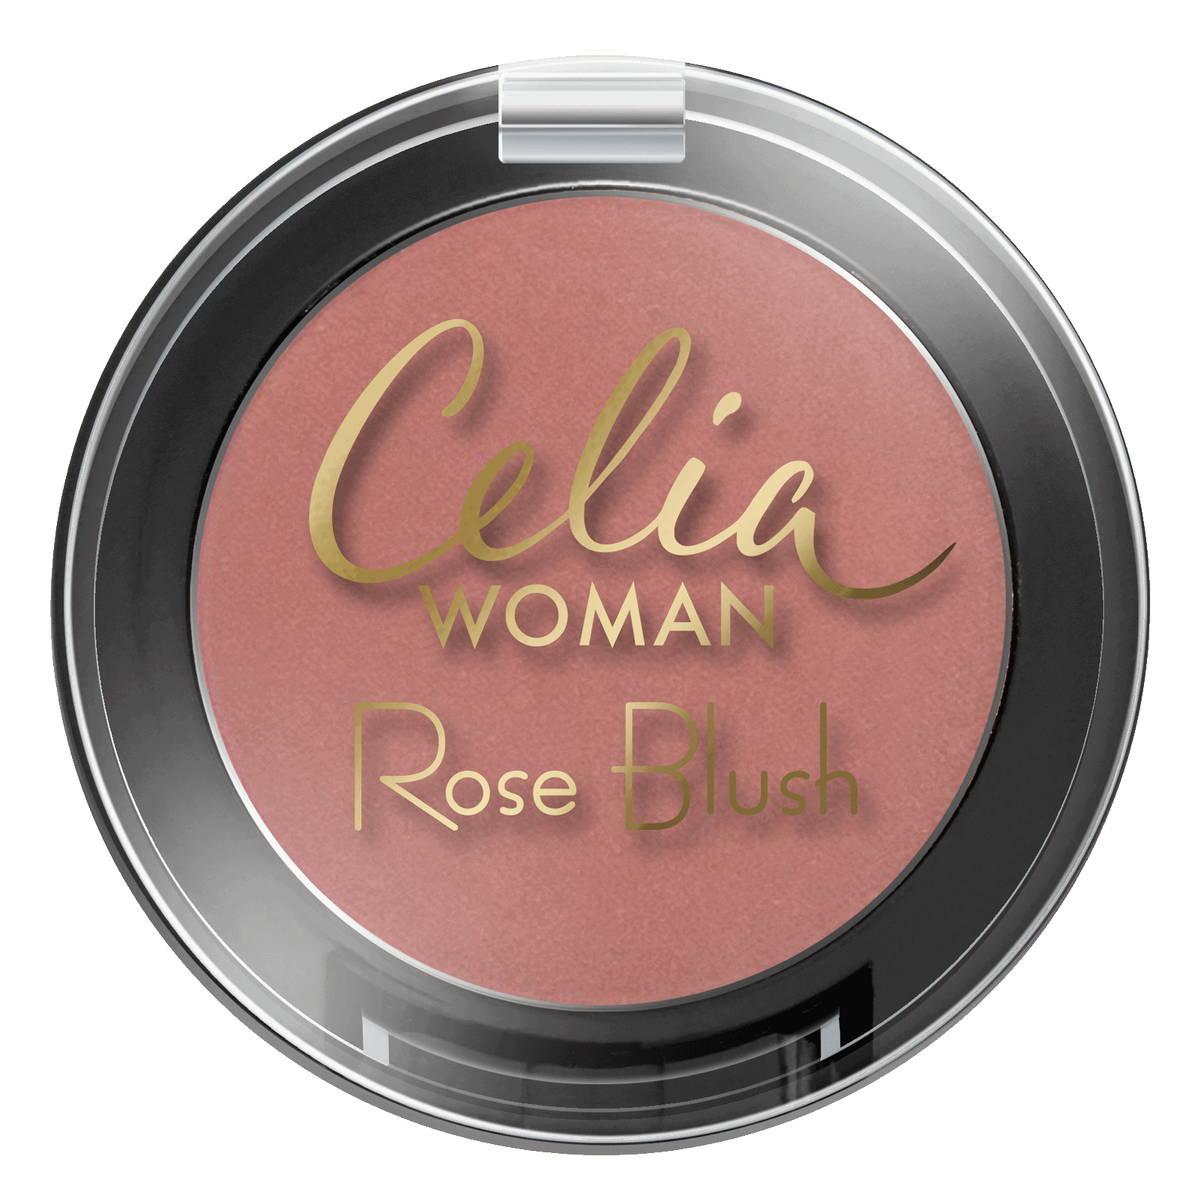 Celia Woman róż 05